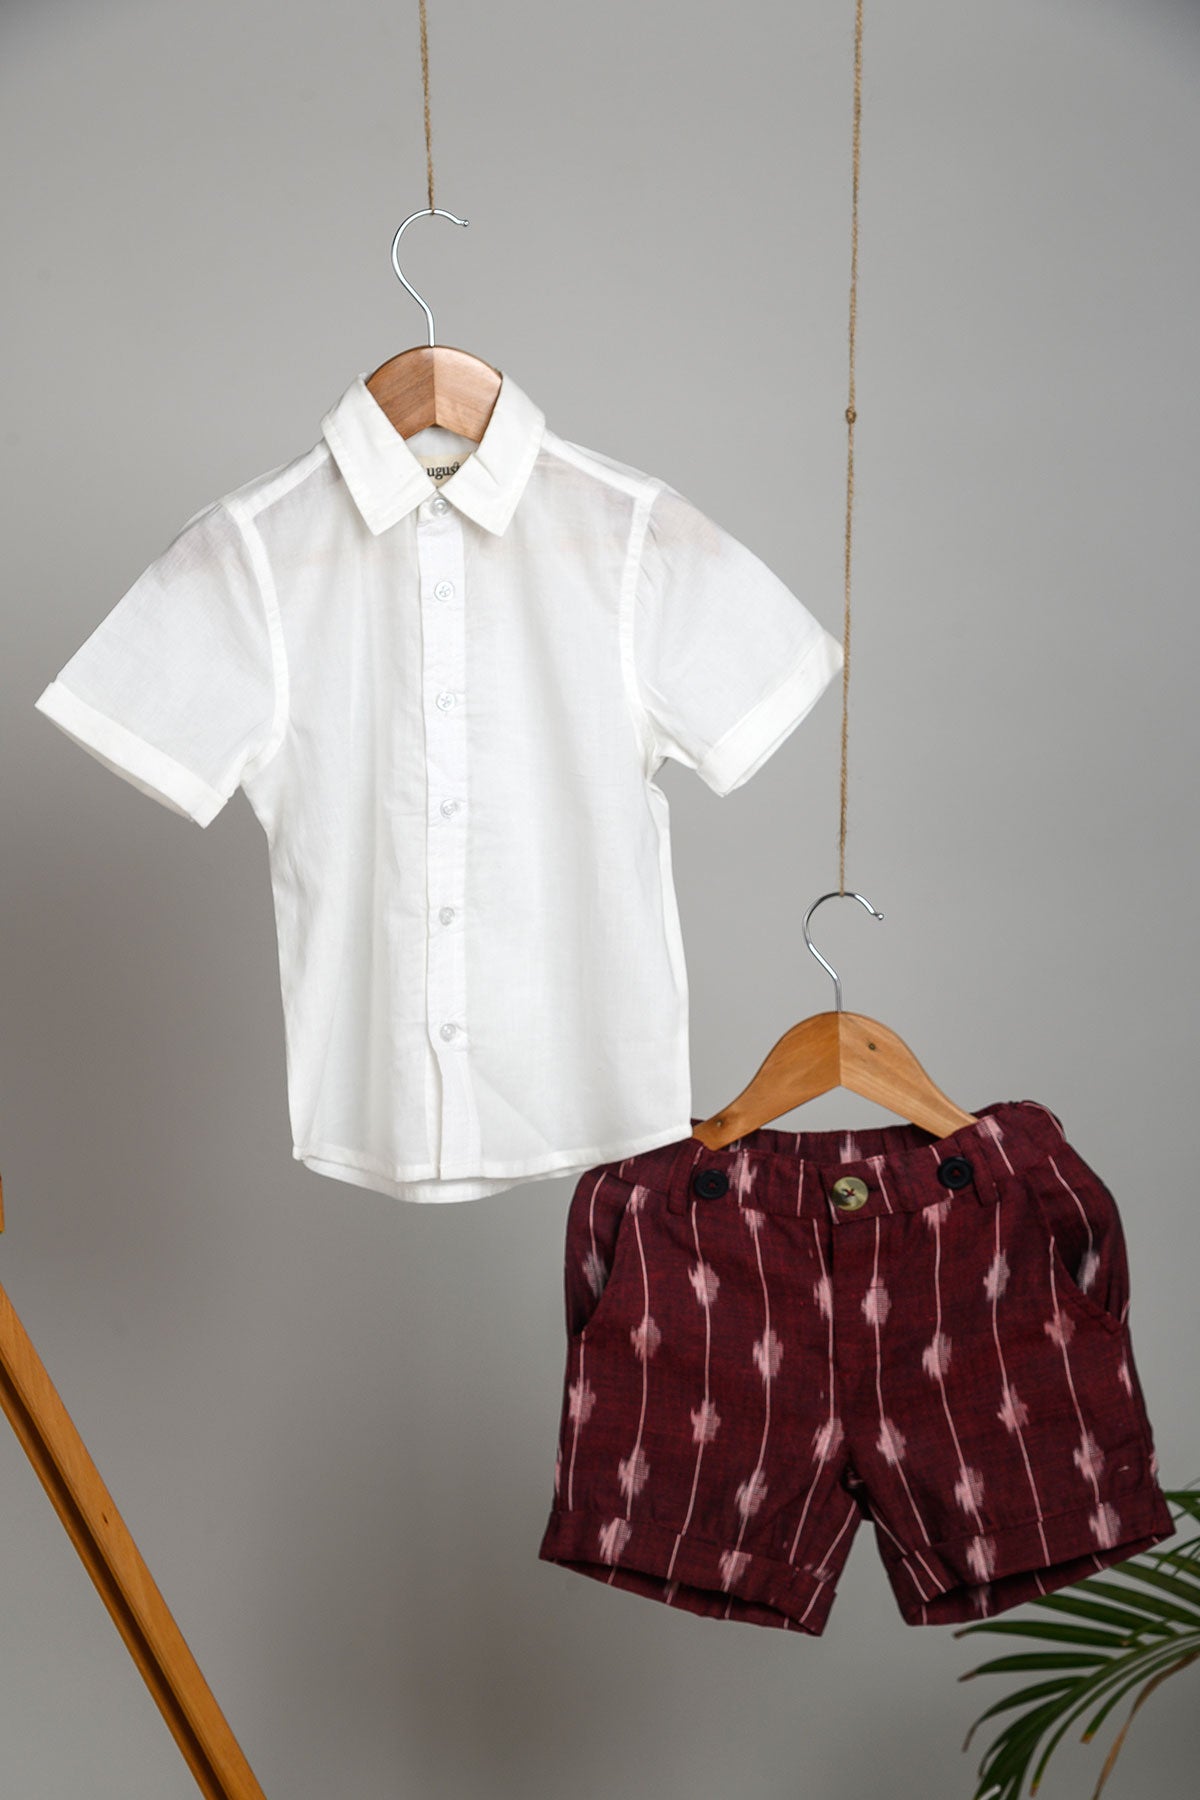 Ladla Ikat Shorts, Half Shirt and Suspenders Set - Burgundy